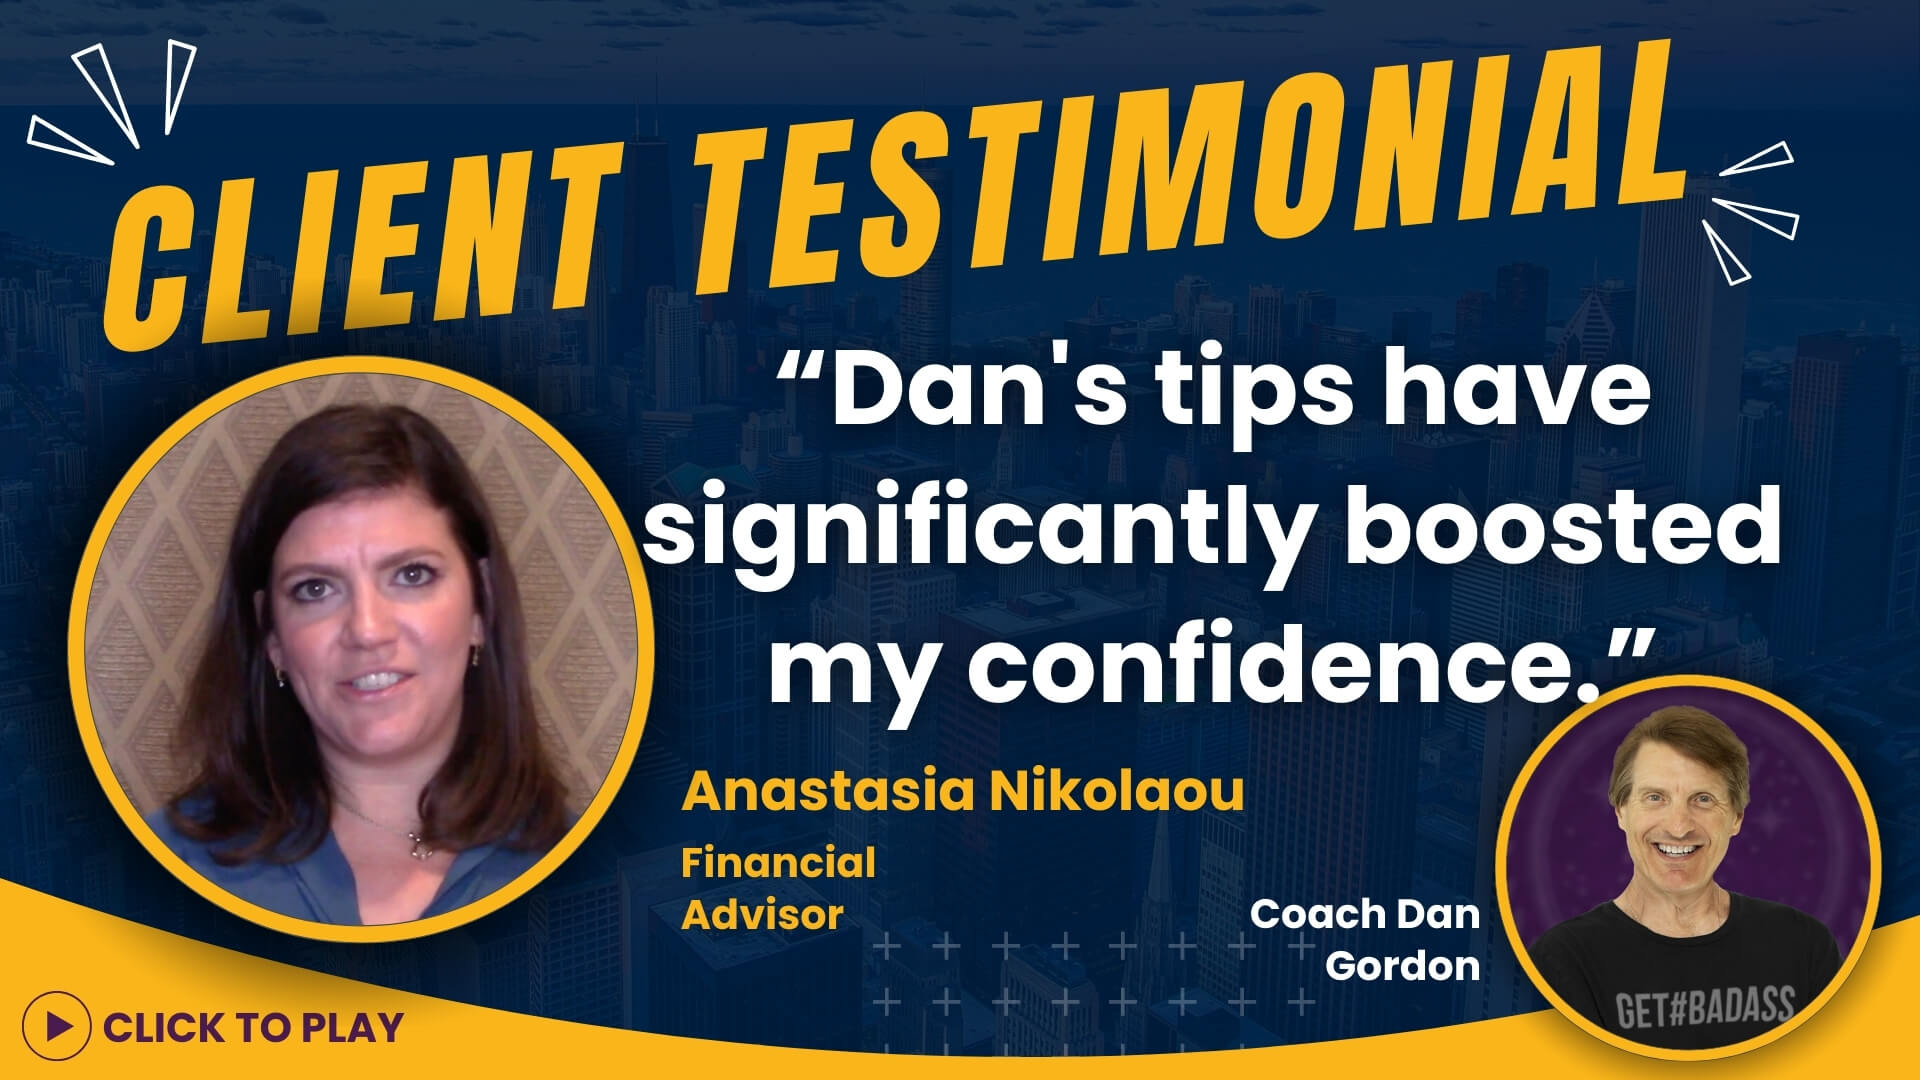 Anastasia Nikolaou, a financial advisor, shares her testimonial about how Coach Dan Gordon's tips greatly boosted her confidence, featuring a clickable video button.